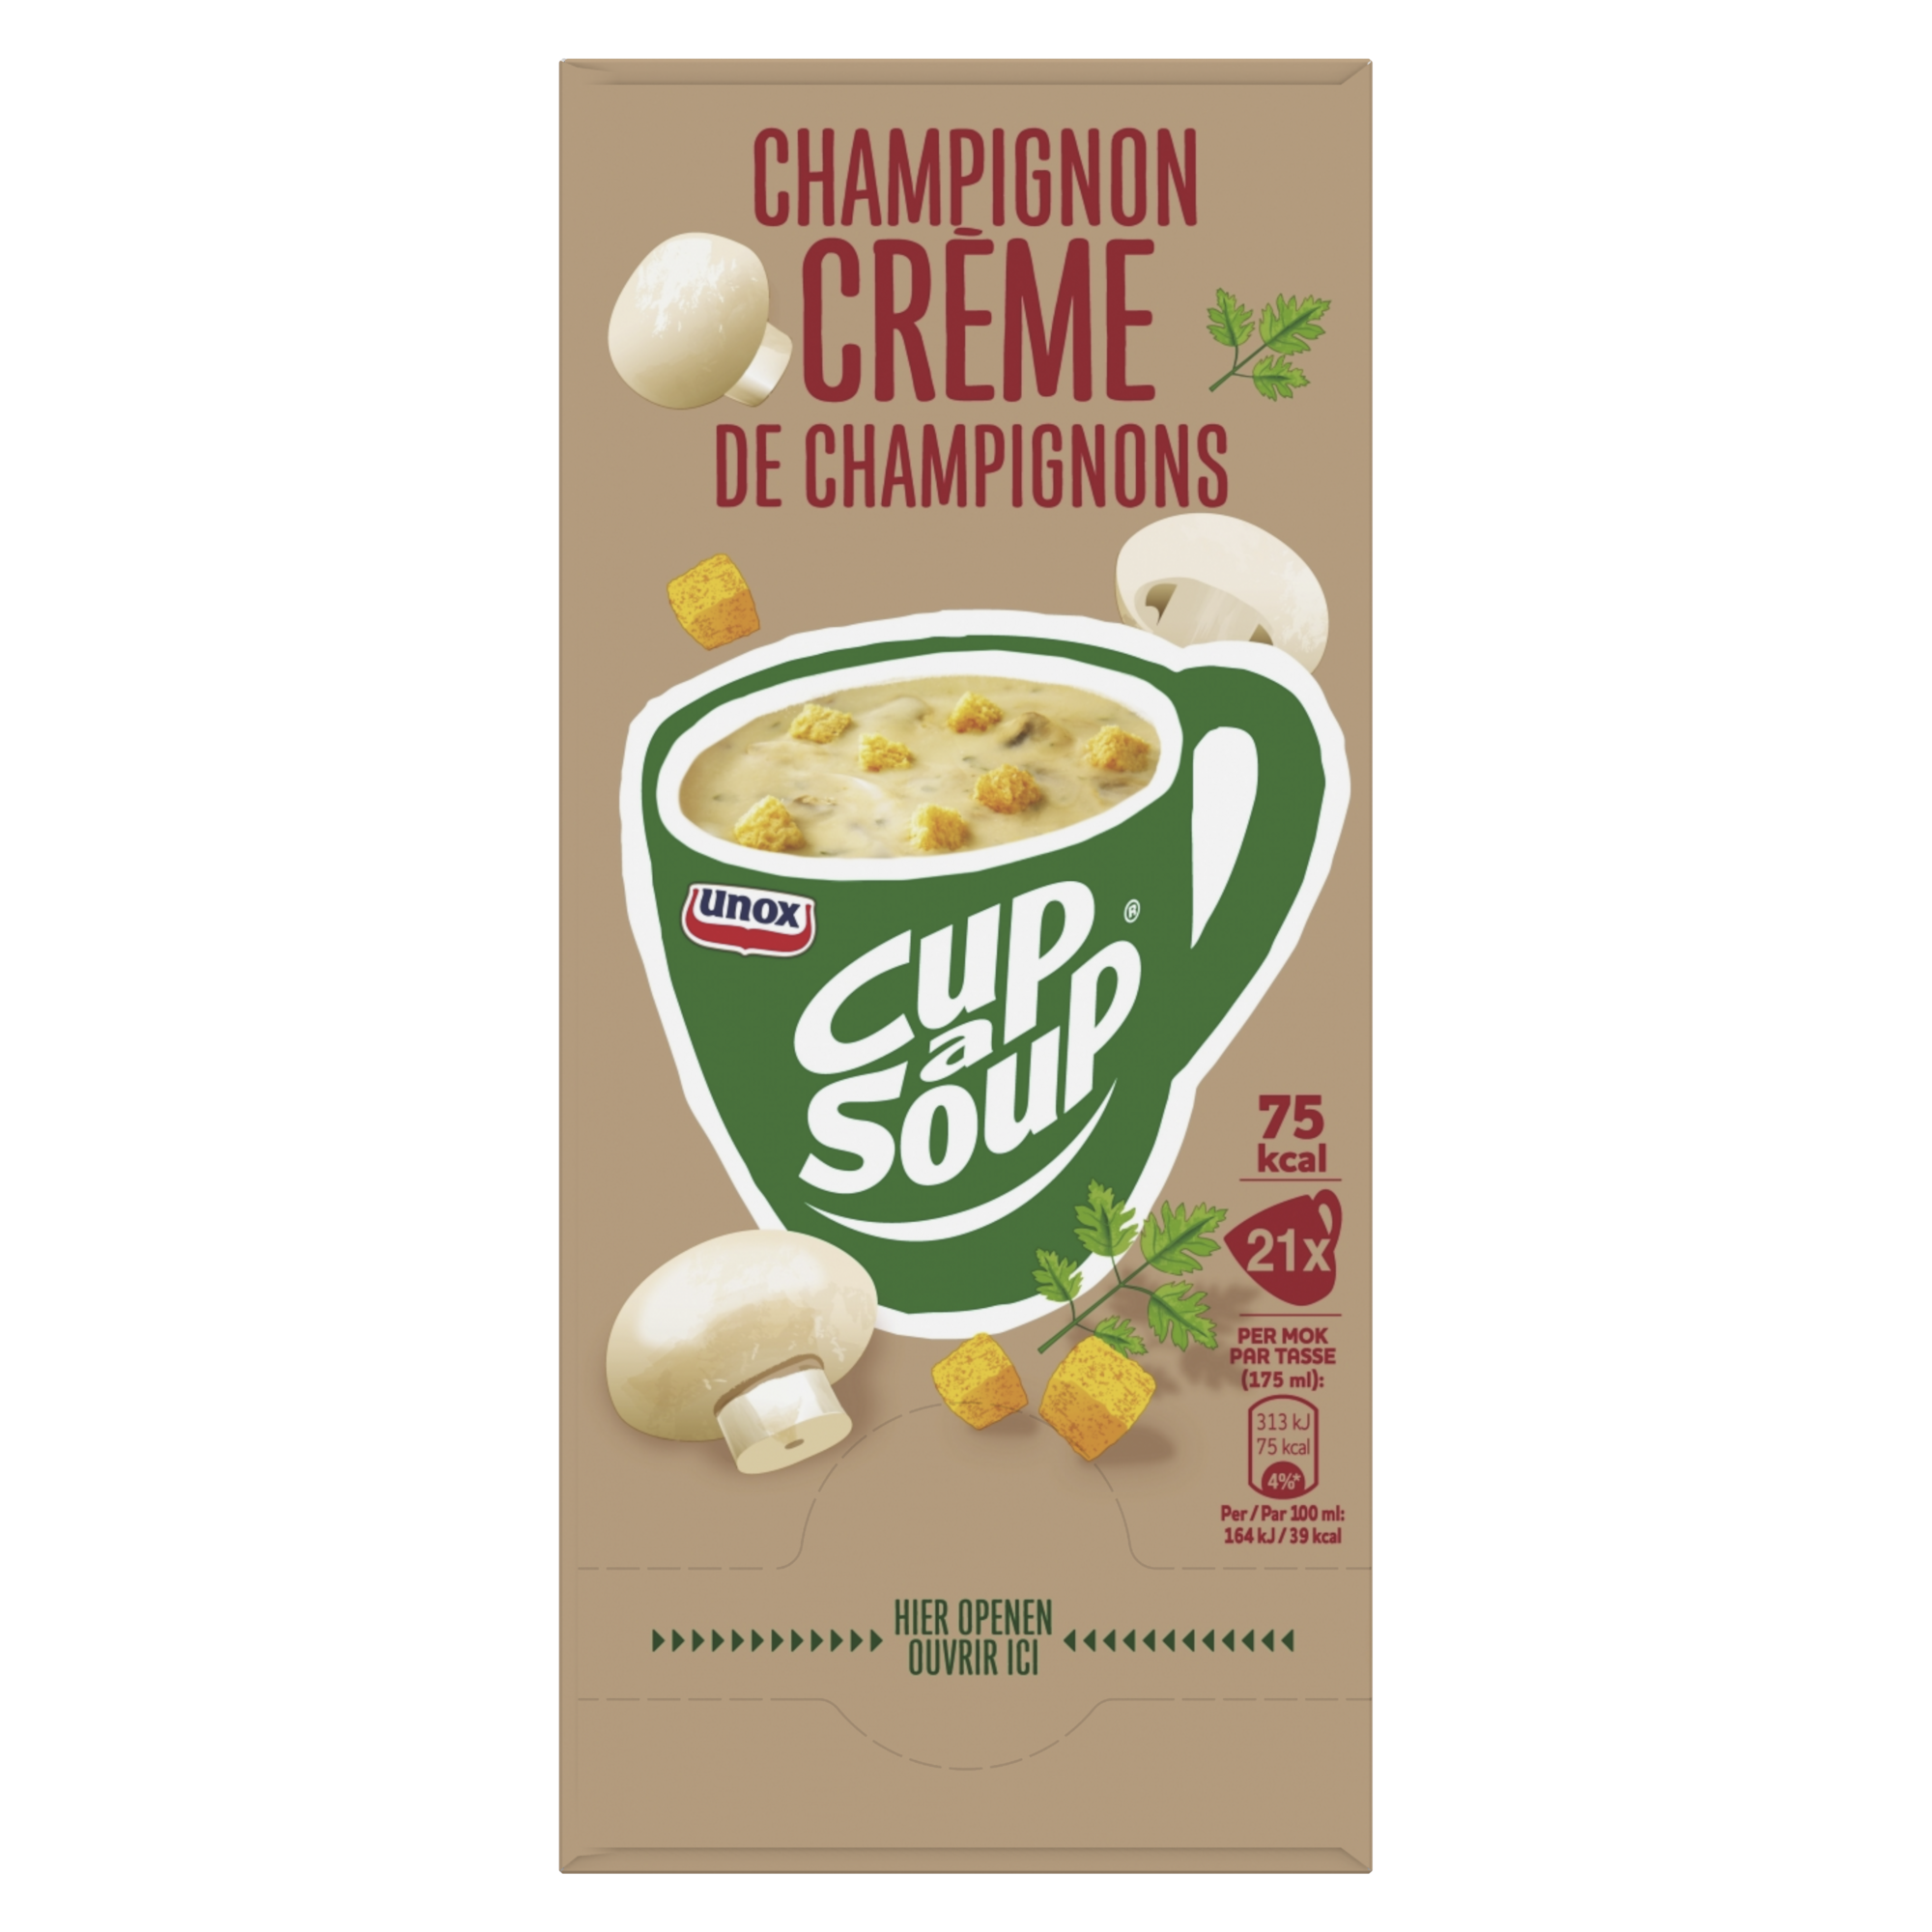 51487 Champignon creme cup-a-soup 21x175 ml